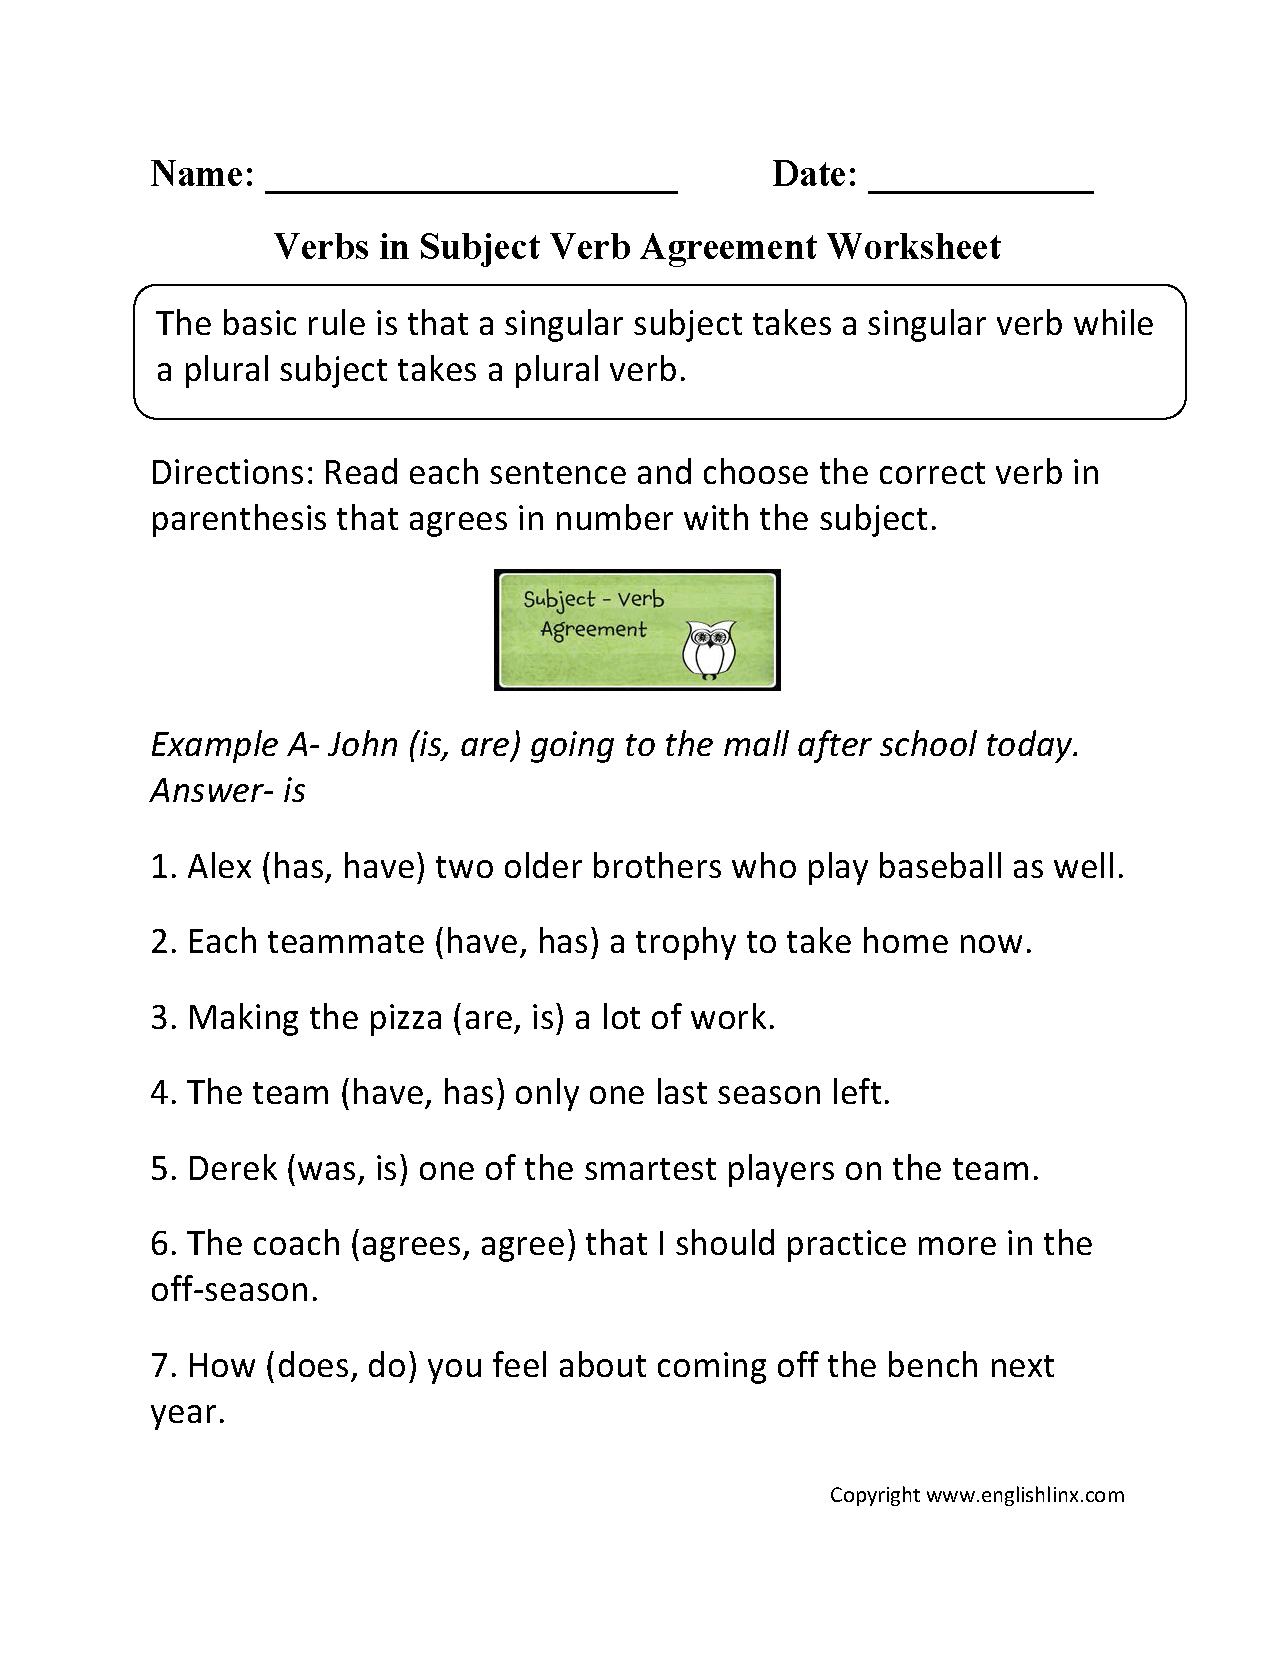 worksheet. Subject Verb Agreement Printable Worksheets. Grass Fedjp